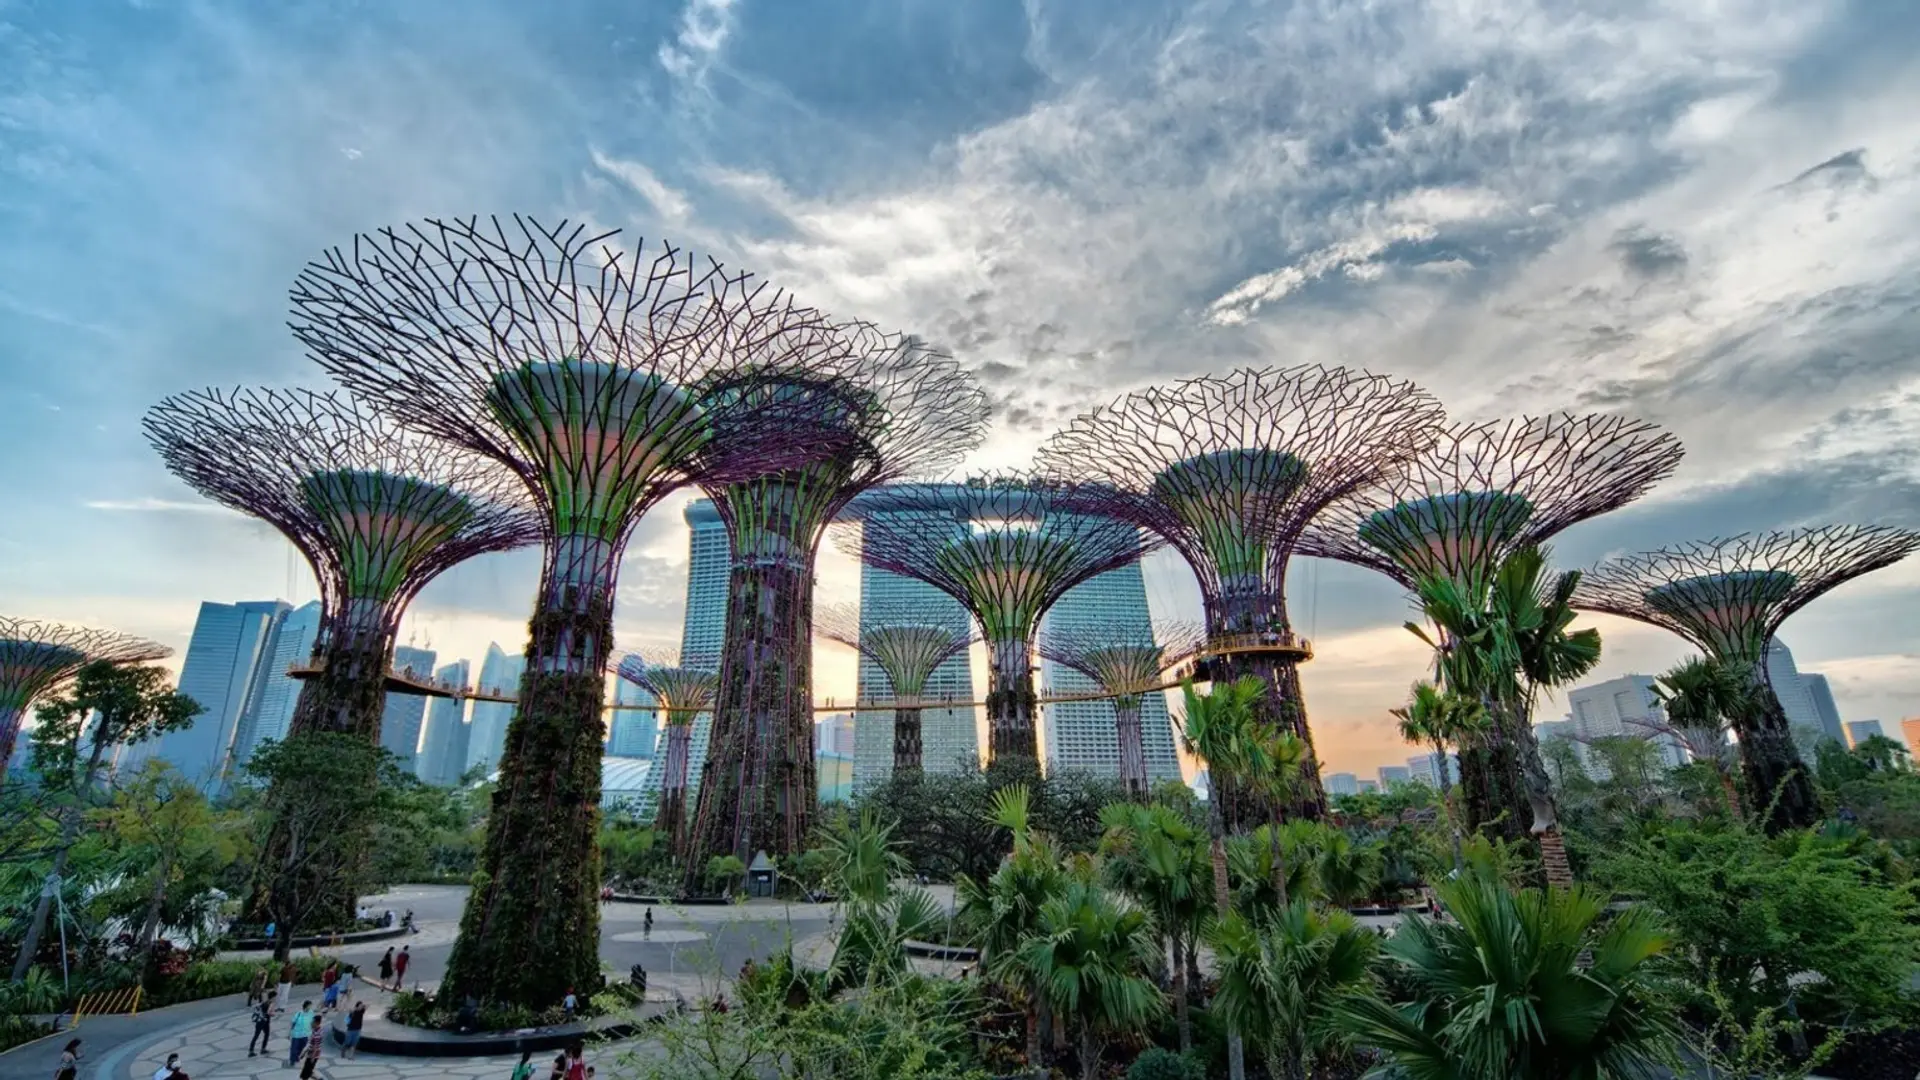 Destinations Articles - Singapore Travel Guide